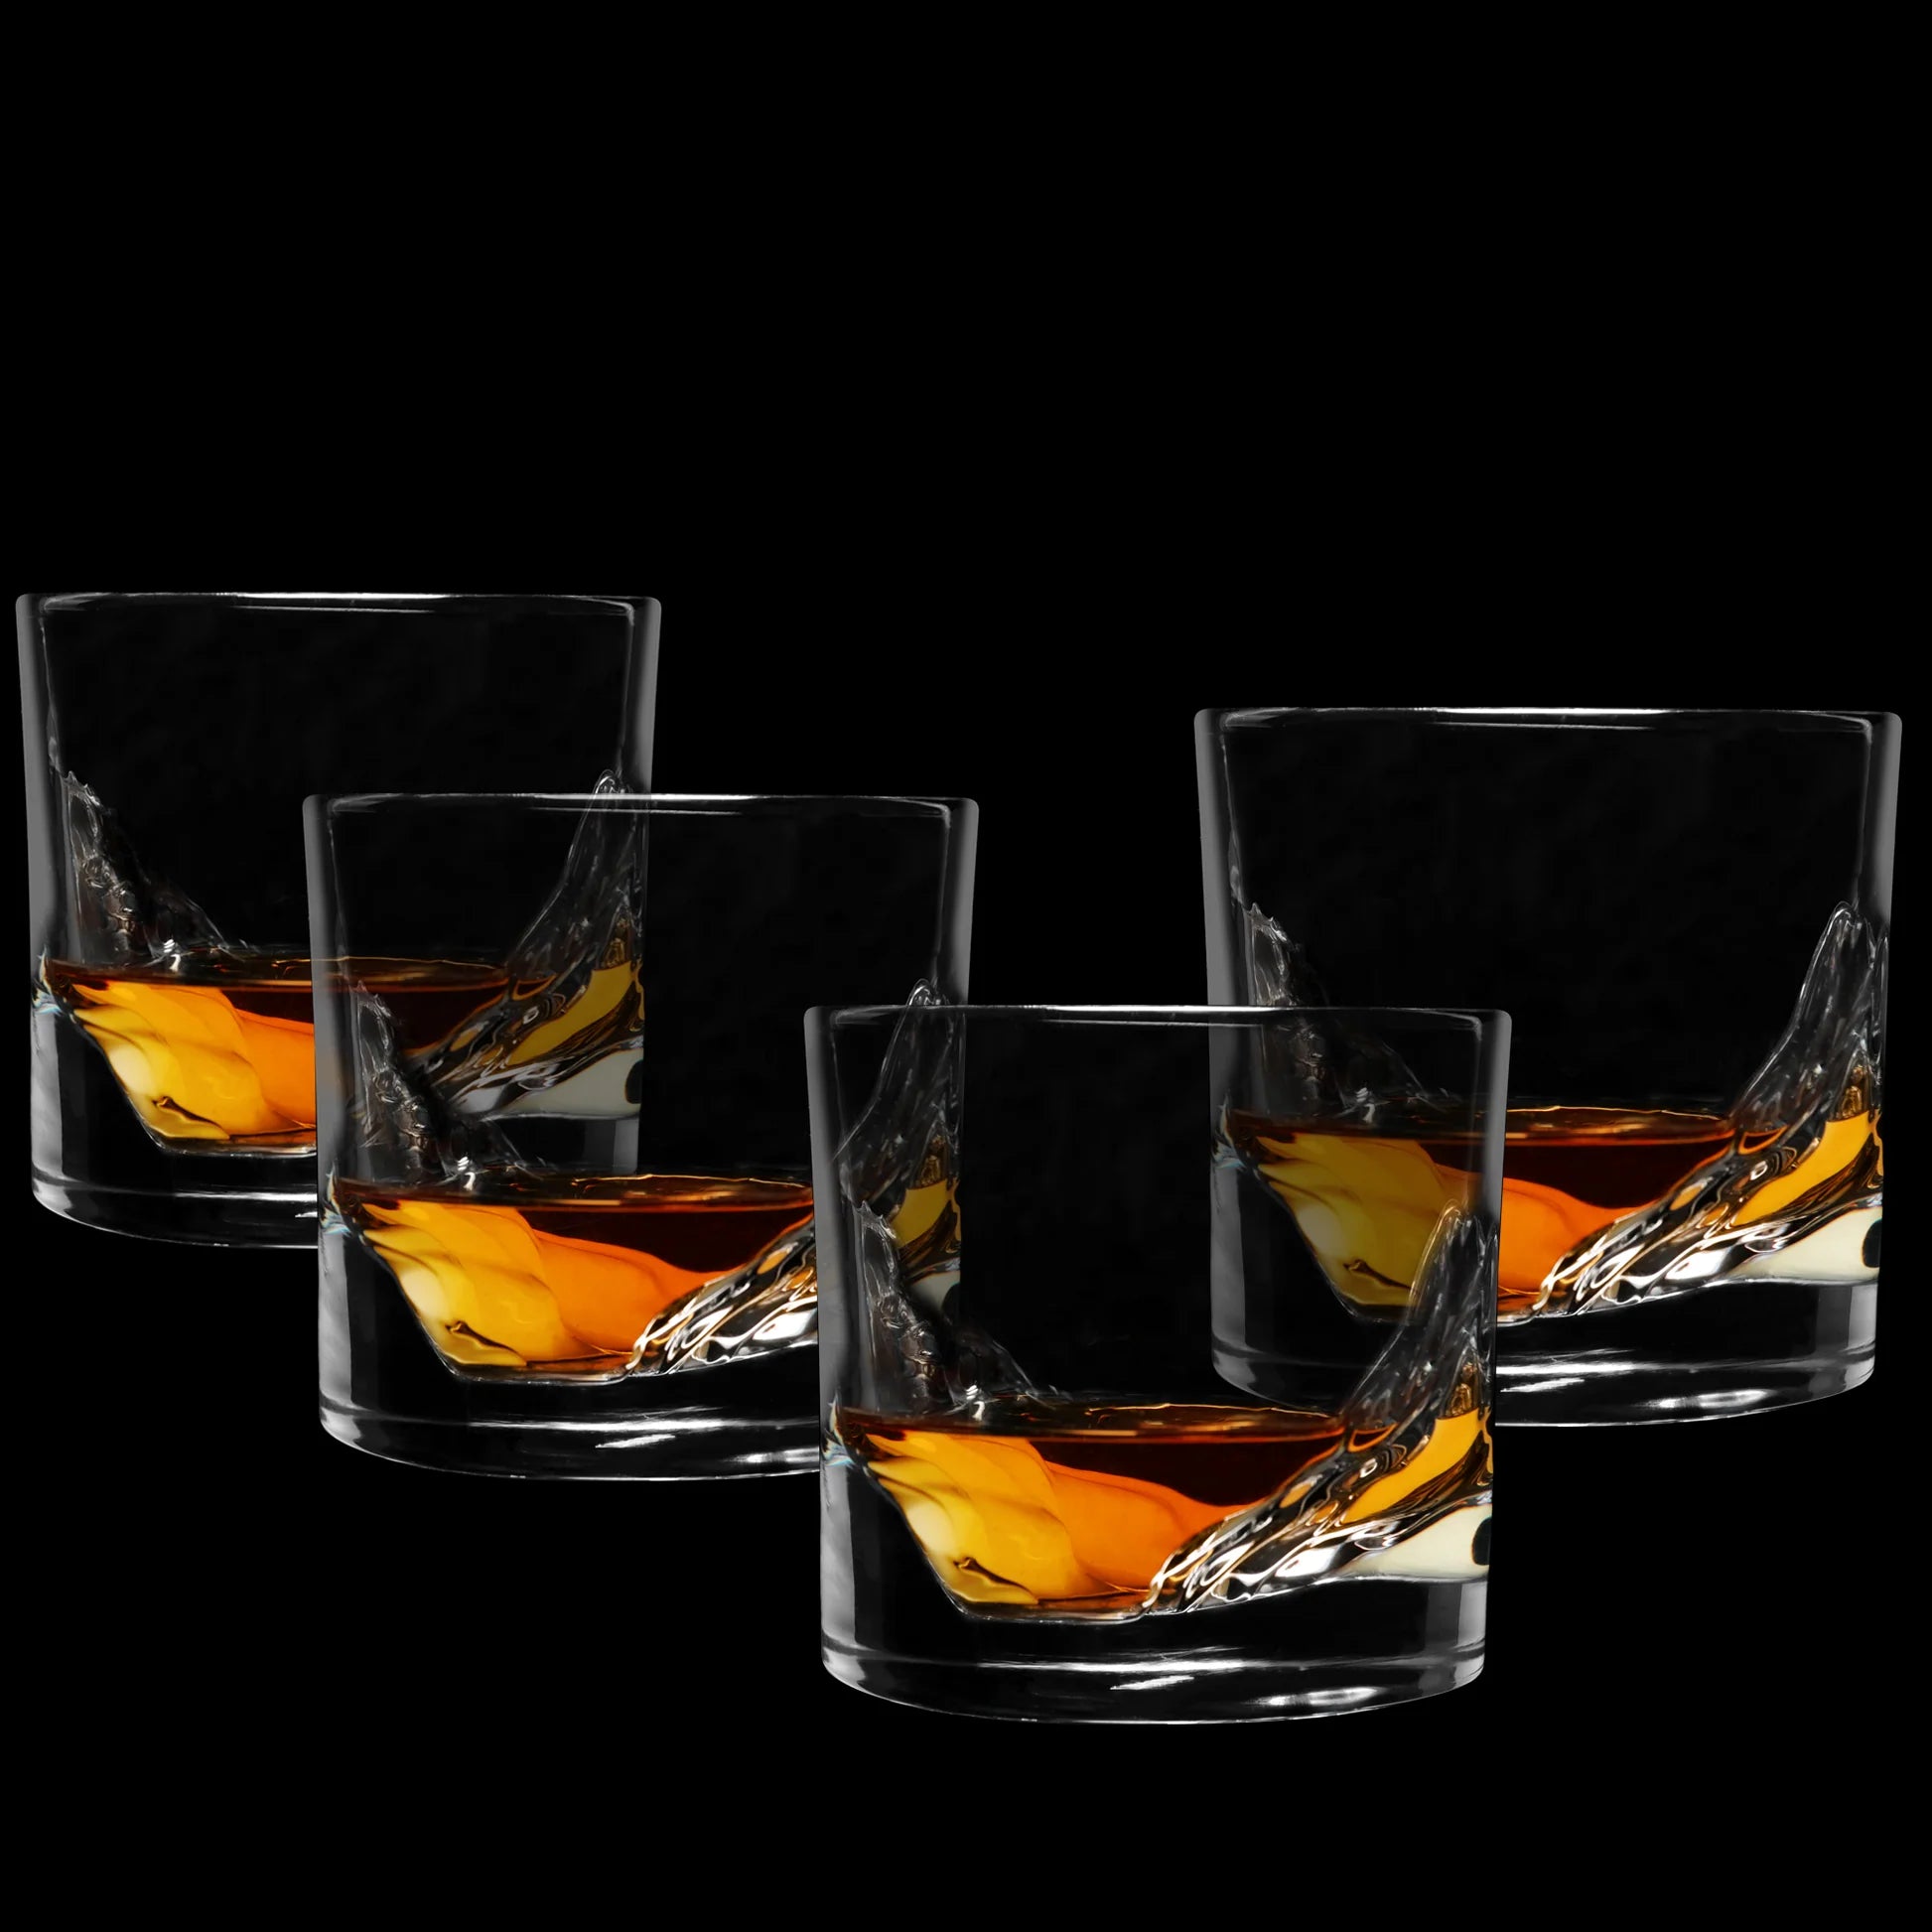 NJ Whiskey Glass Set - Whisky Chilling Gift Set - Scotch Metal Ice Cub